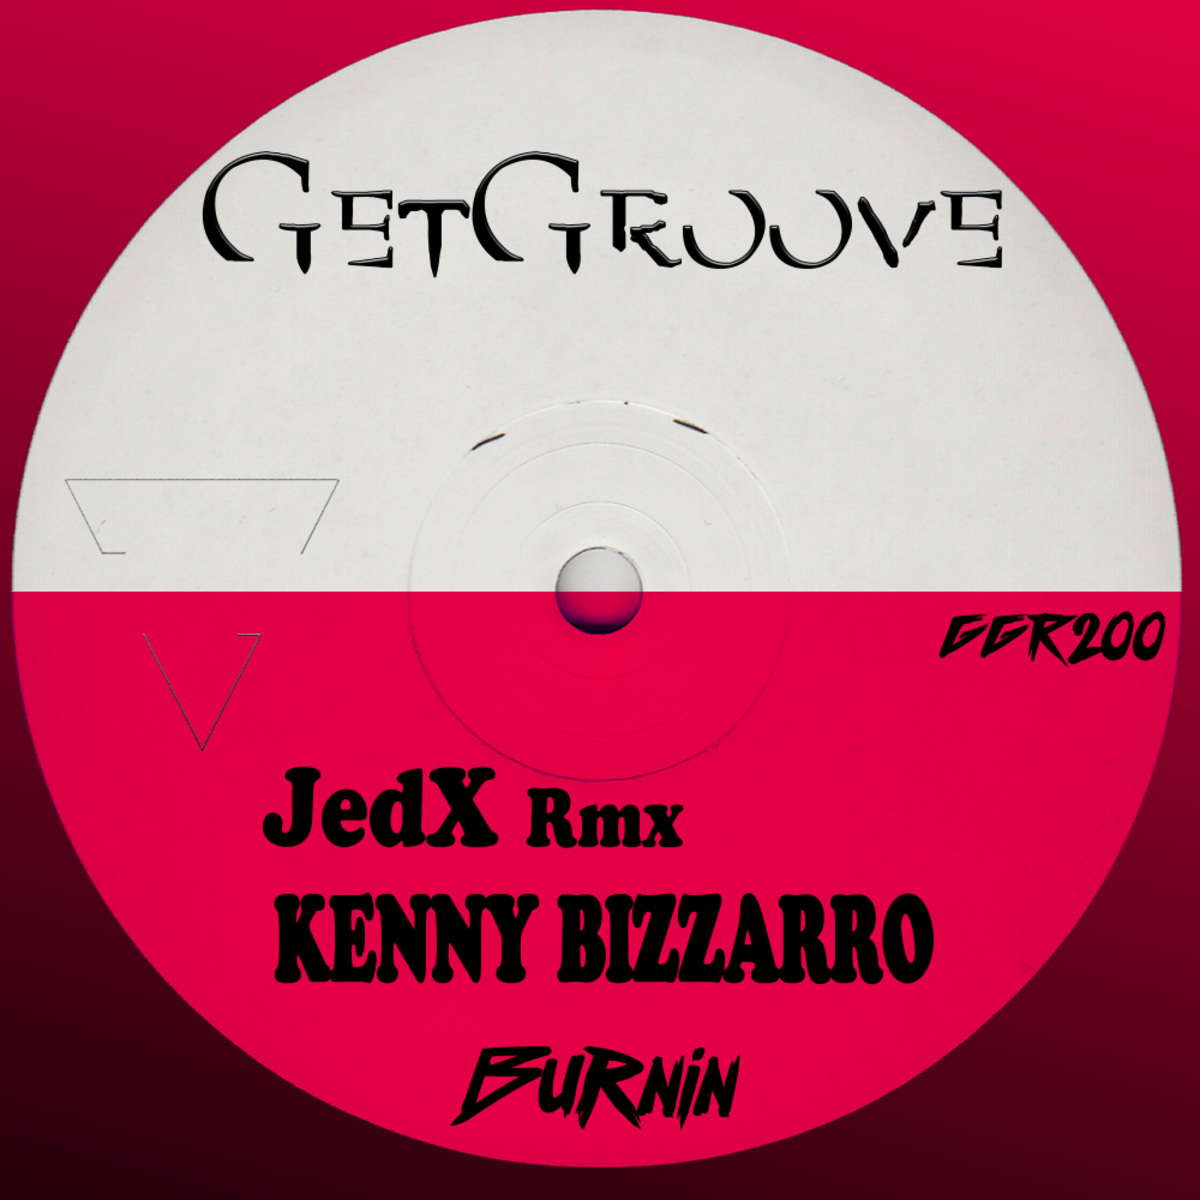 Kenny Bizzarro - Burnin (JedX Remix) / Get Groove Record